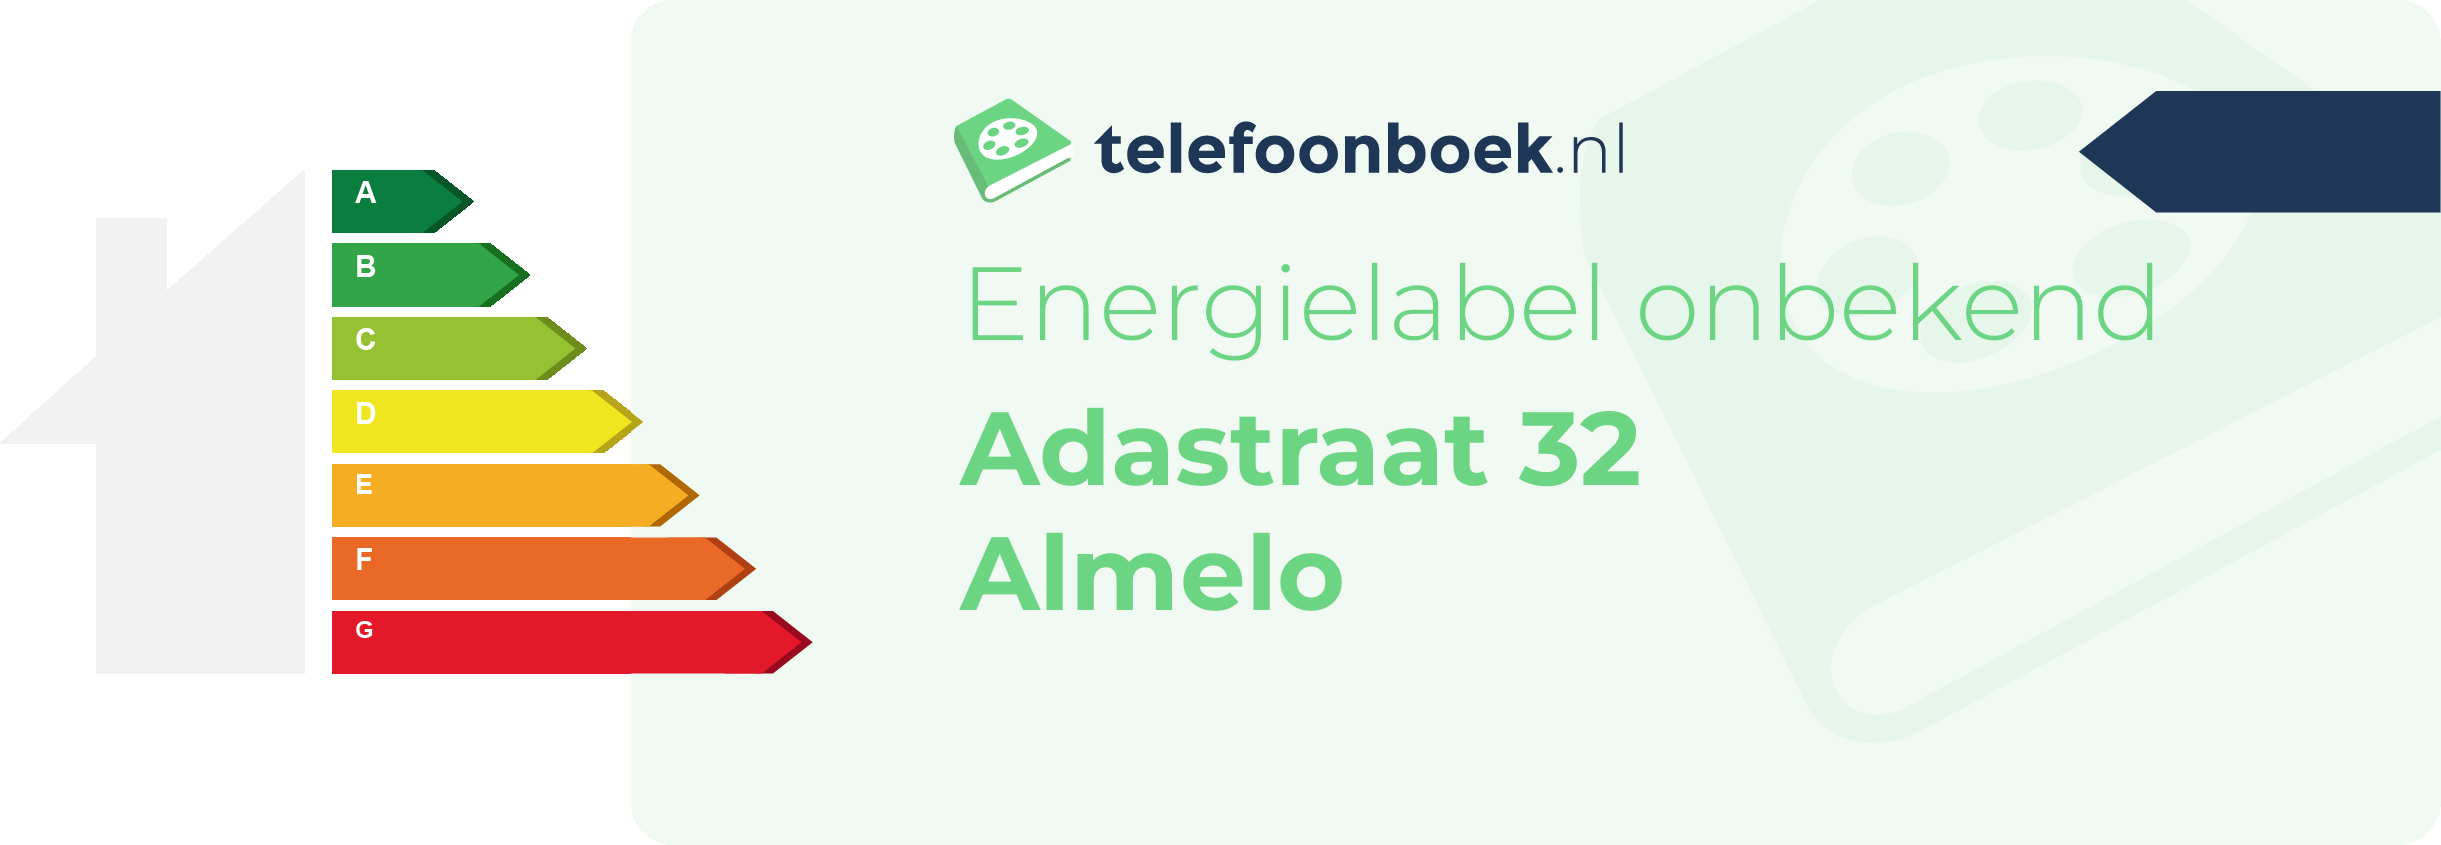 Energielabel Adastraat 32 Almelo